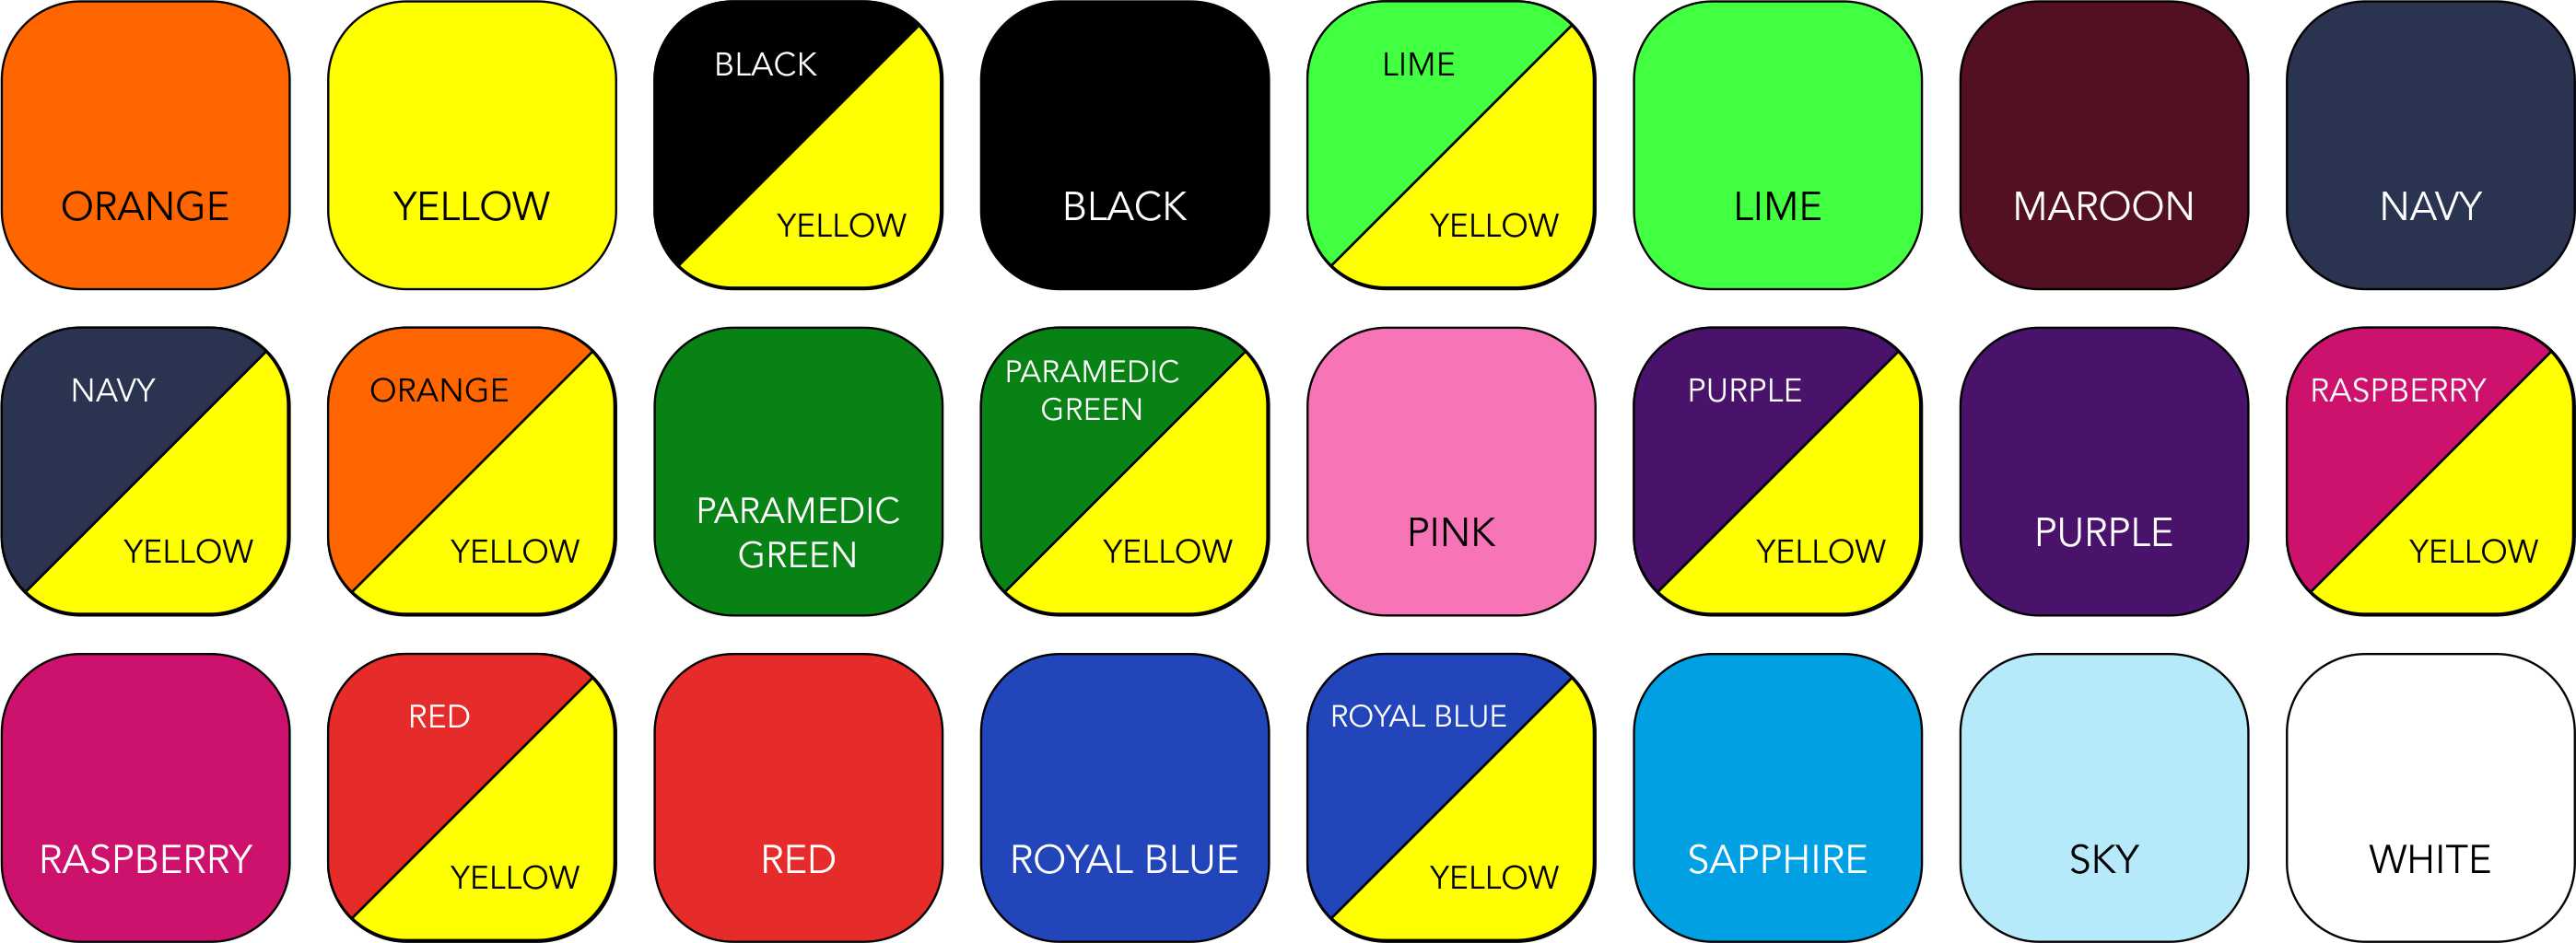 YK001 Unisex Colour Range